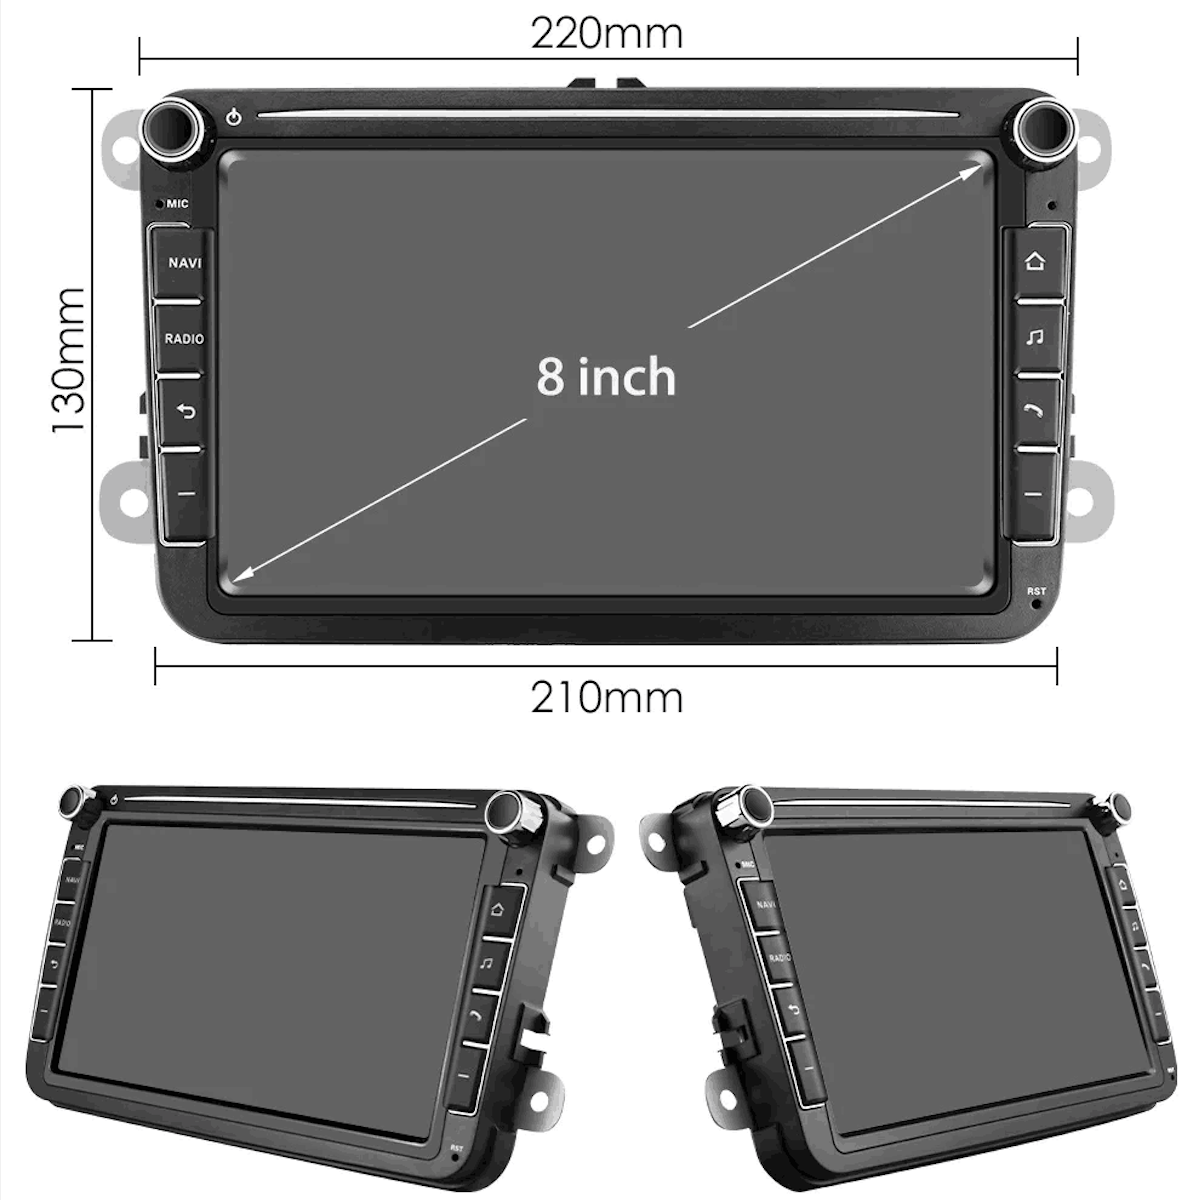 Apple CarPlay / Android Auto - Inbouwscherm 8 inch